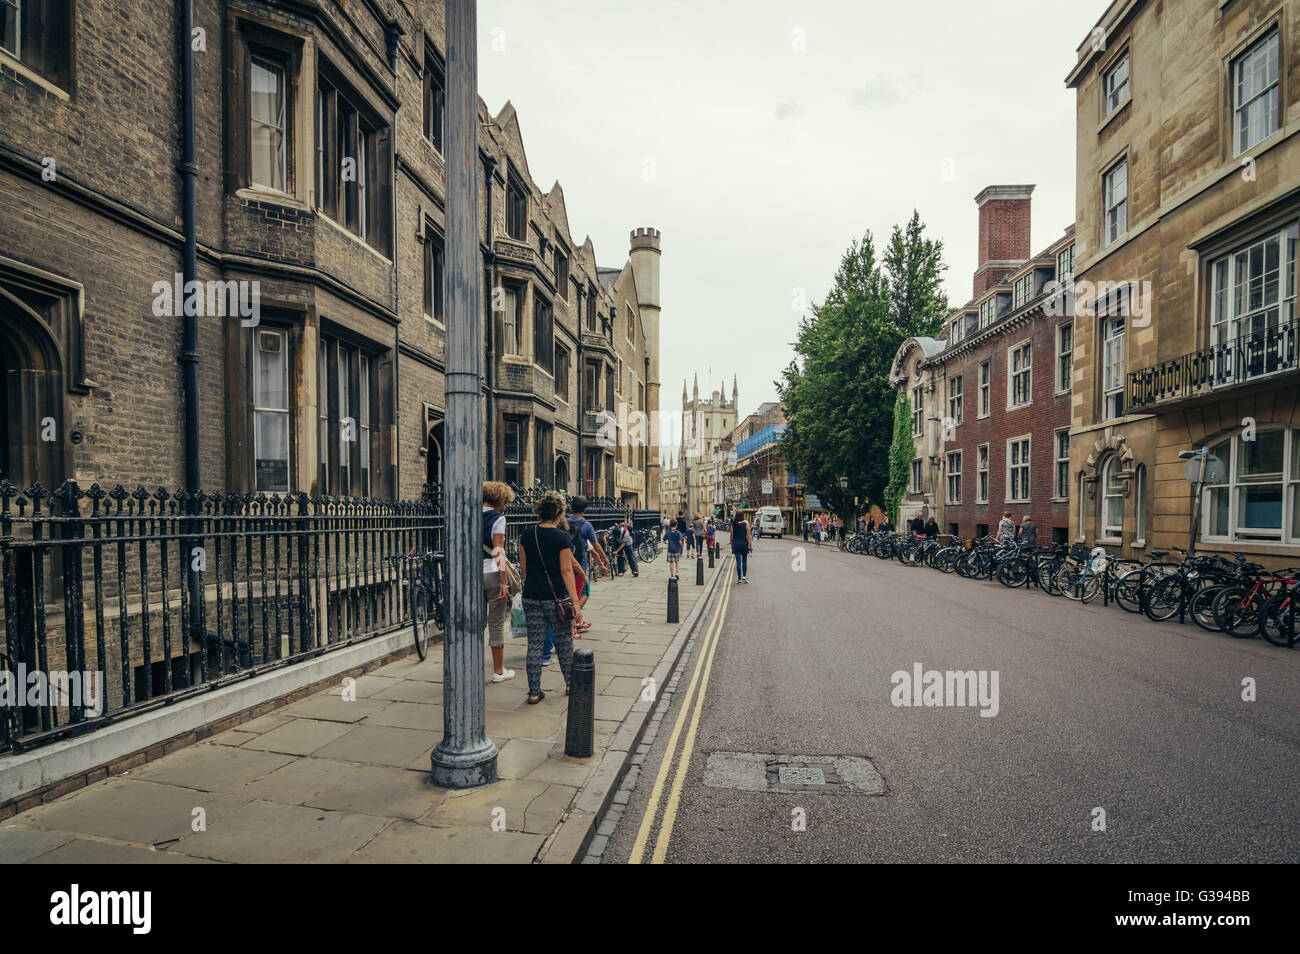 CAMBRIDGE, UK - AUGUST 11, 2015:  People in a Street in Cambridge. Stock Photo